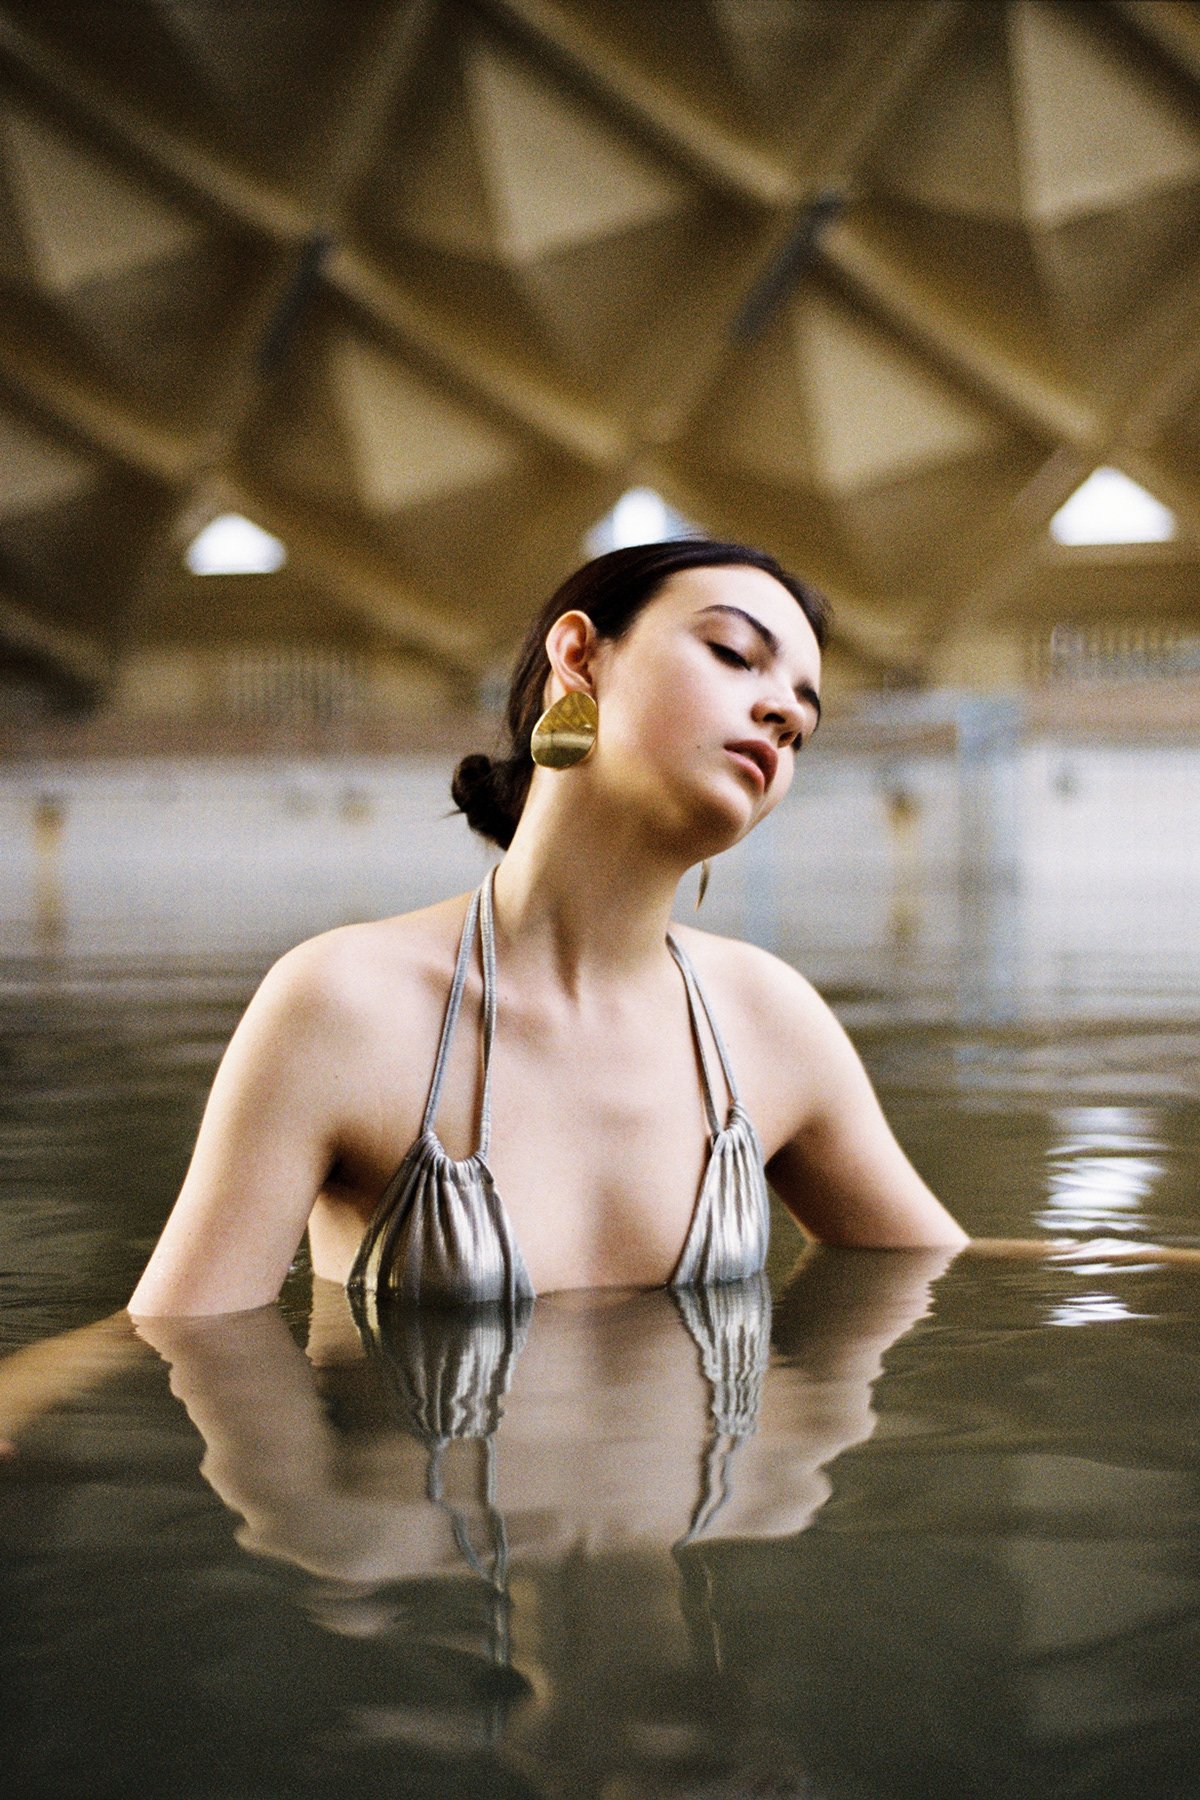 Lena Pogrebnaya Used Kodak Portra for this Stunning Fashion Editorial